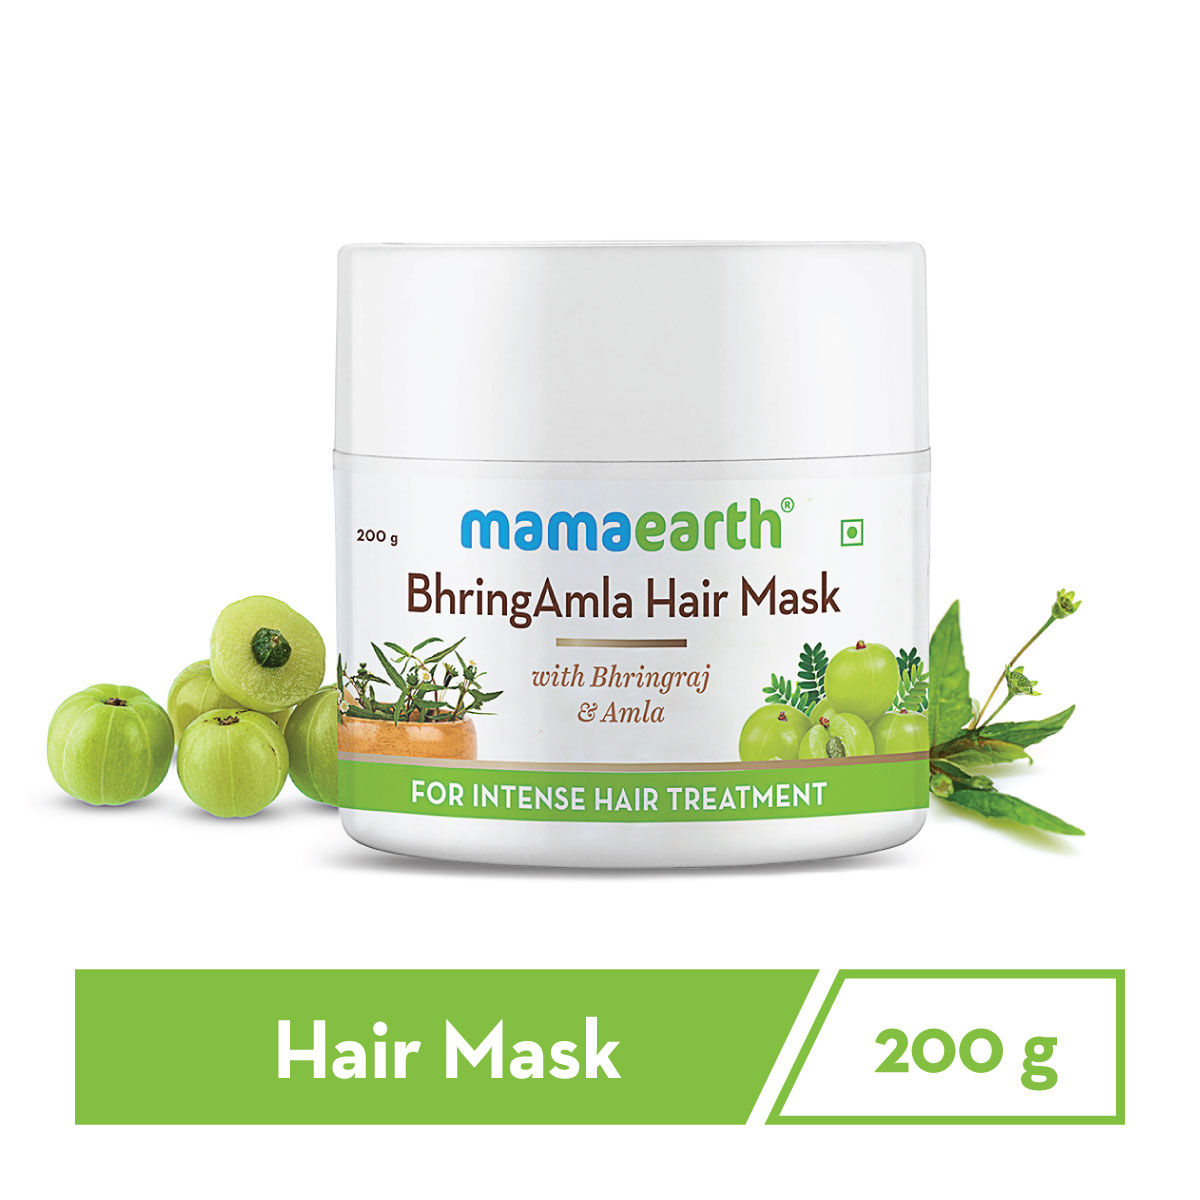 Mamaearth BhringAmla Hair Mask with Bhringraj & Amla for Intense Hair Treatment